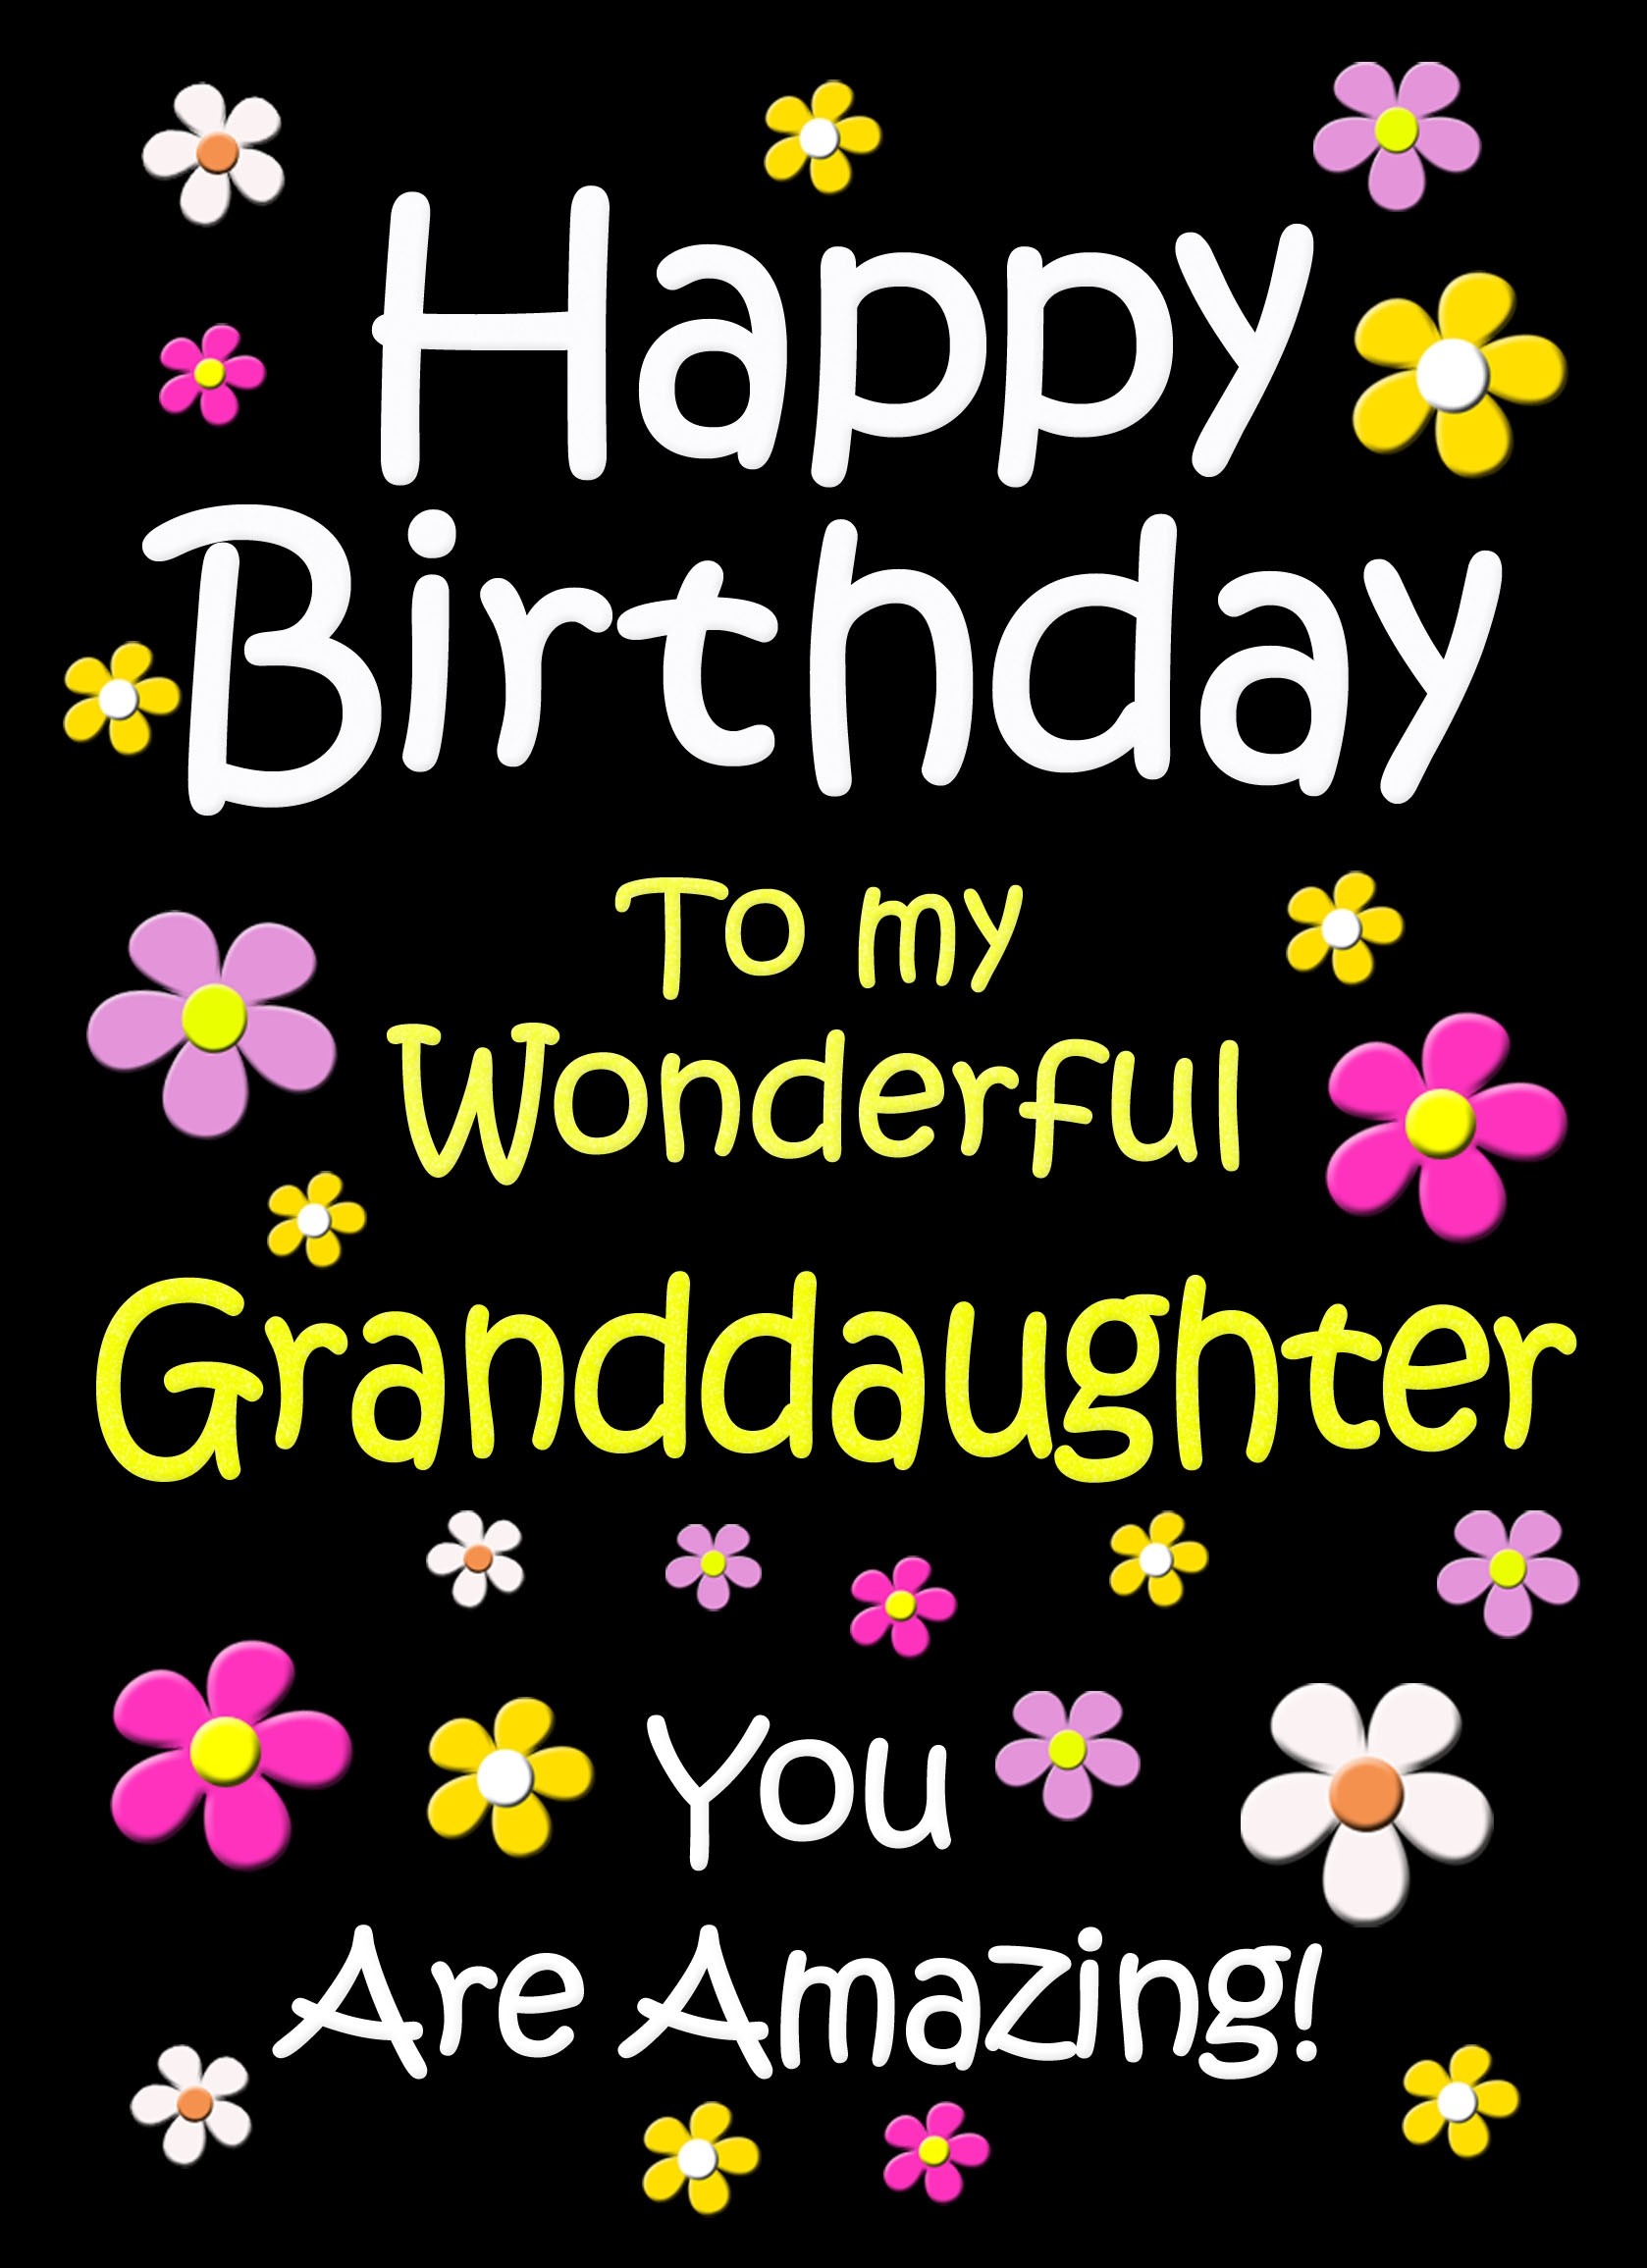 Granddaughter Birthday Card (Black)